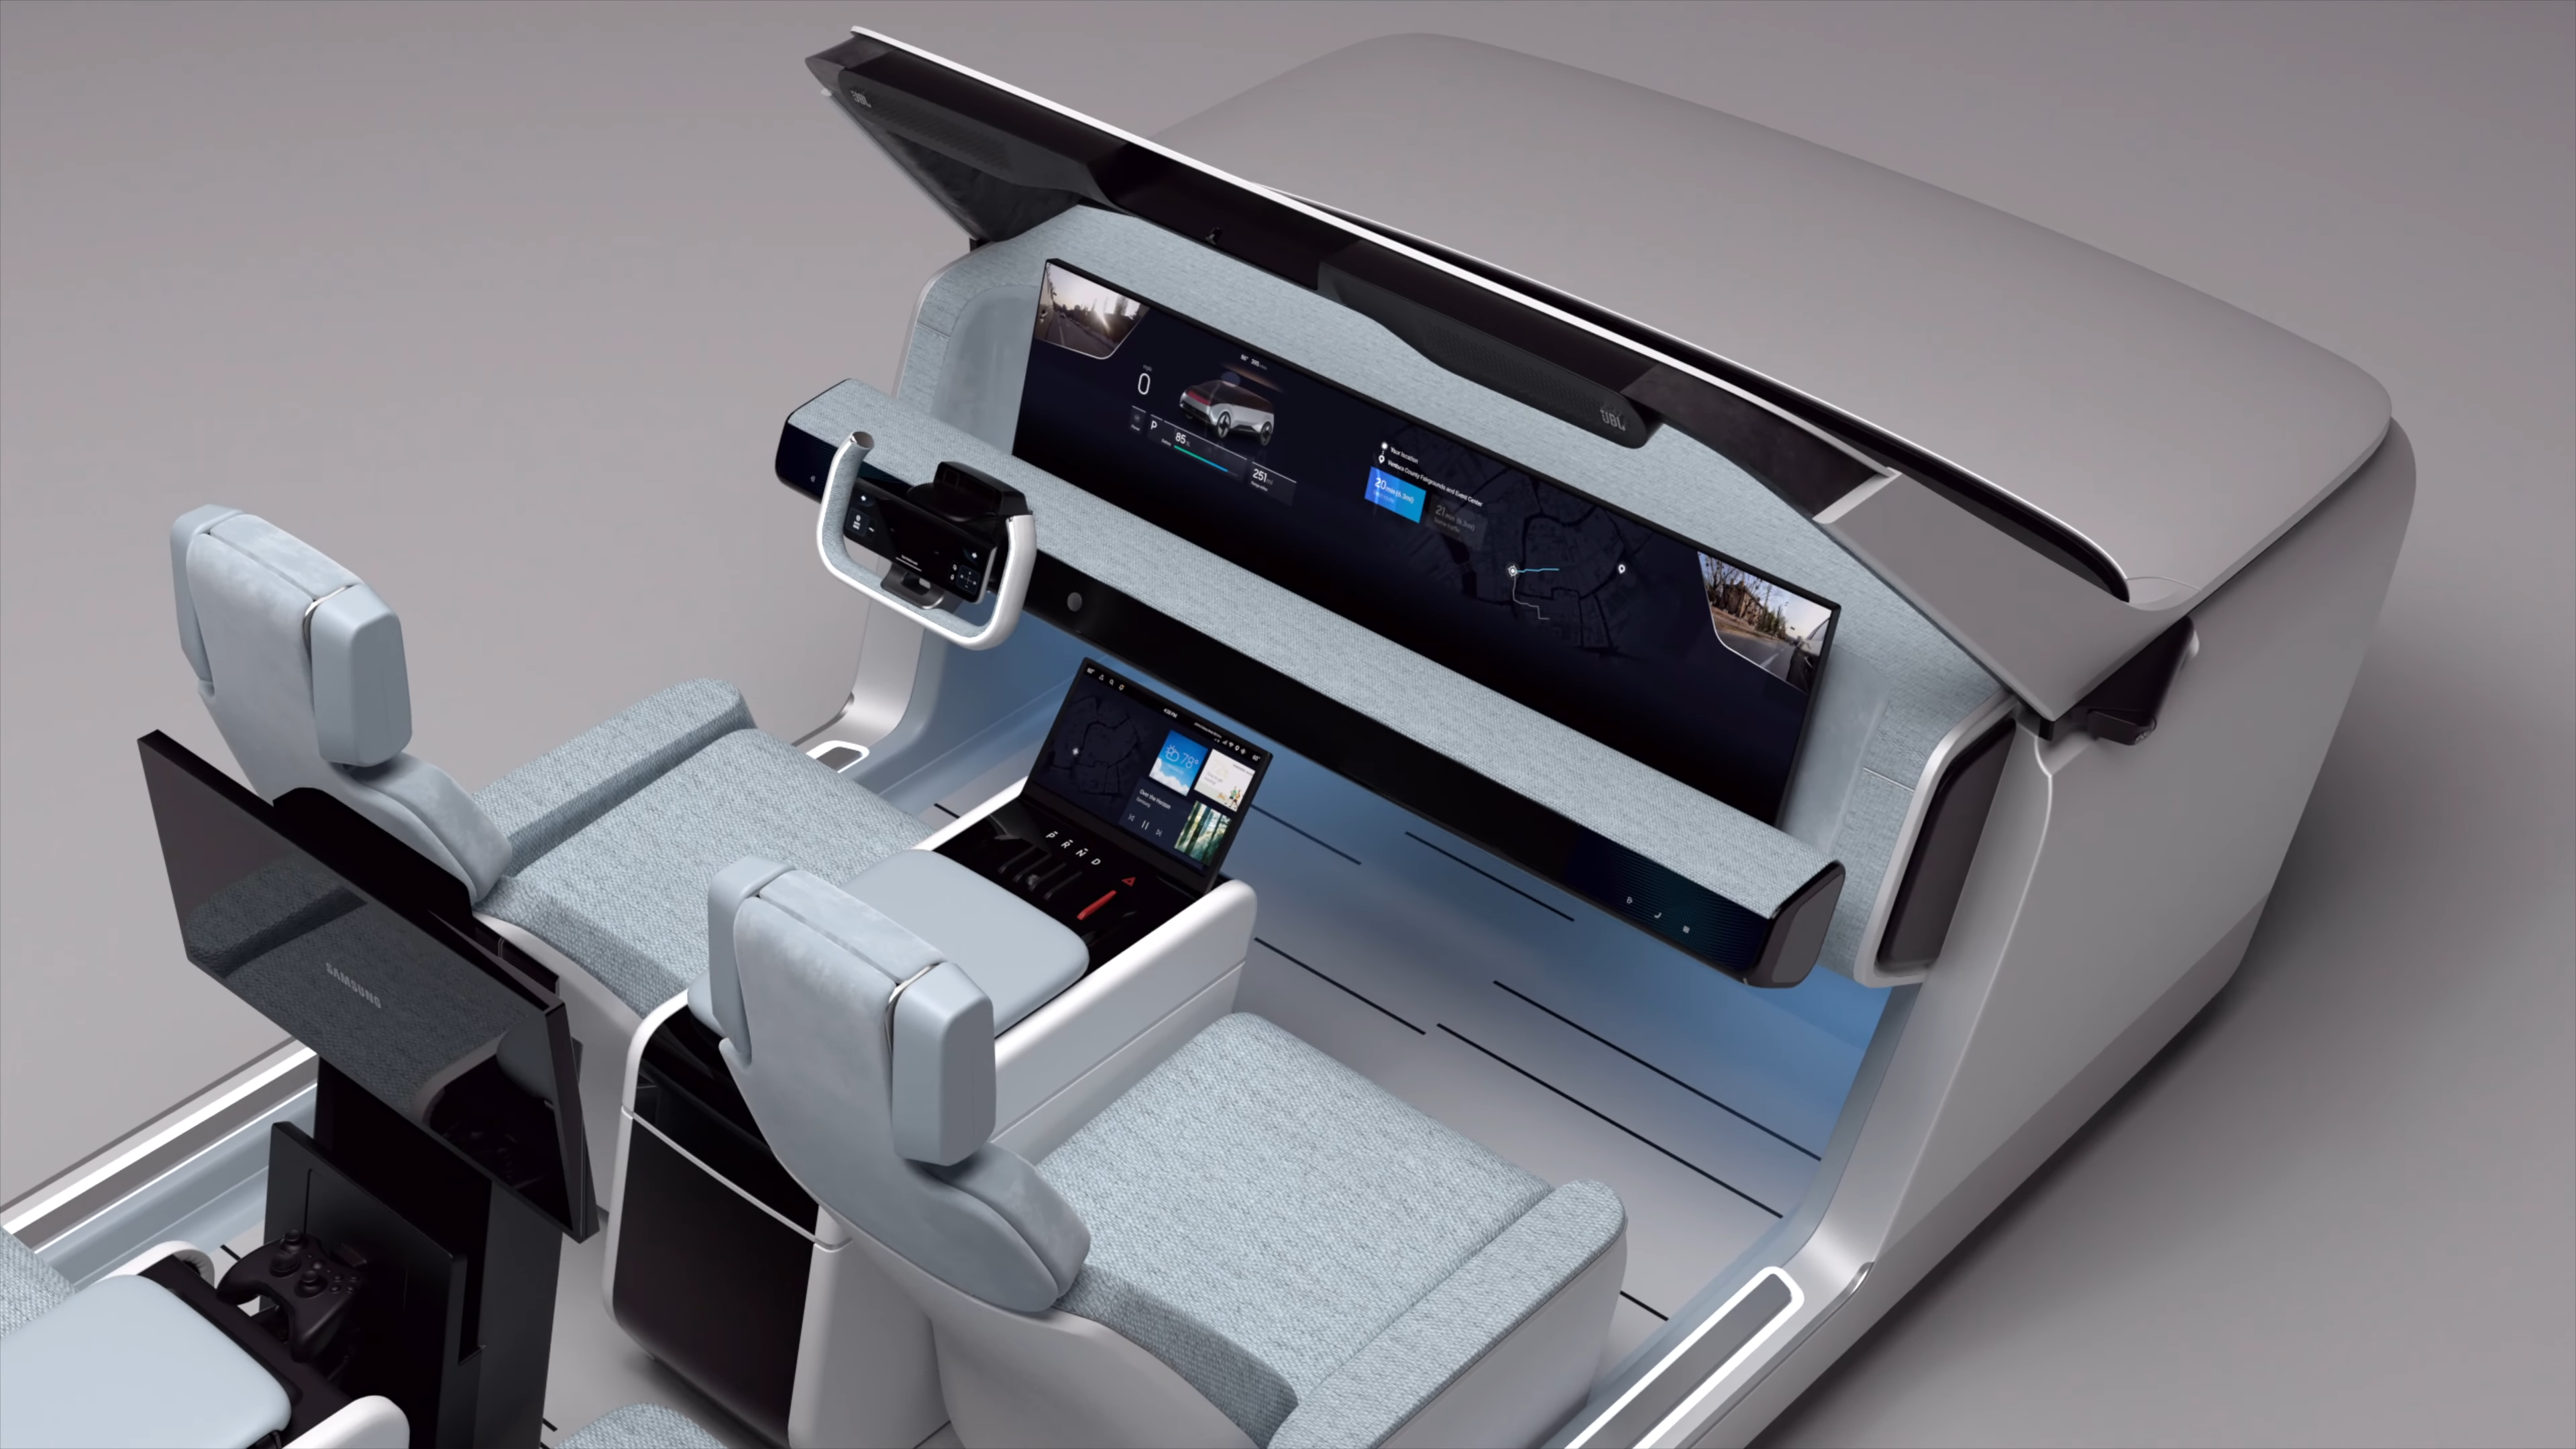 Samsung showcases its next-gen Digital Cockpit for smart cars